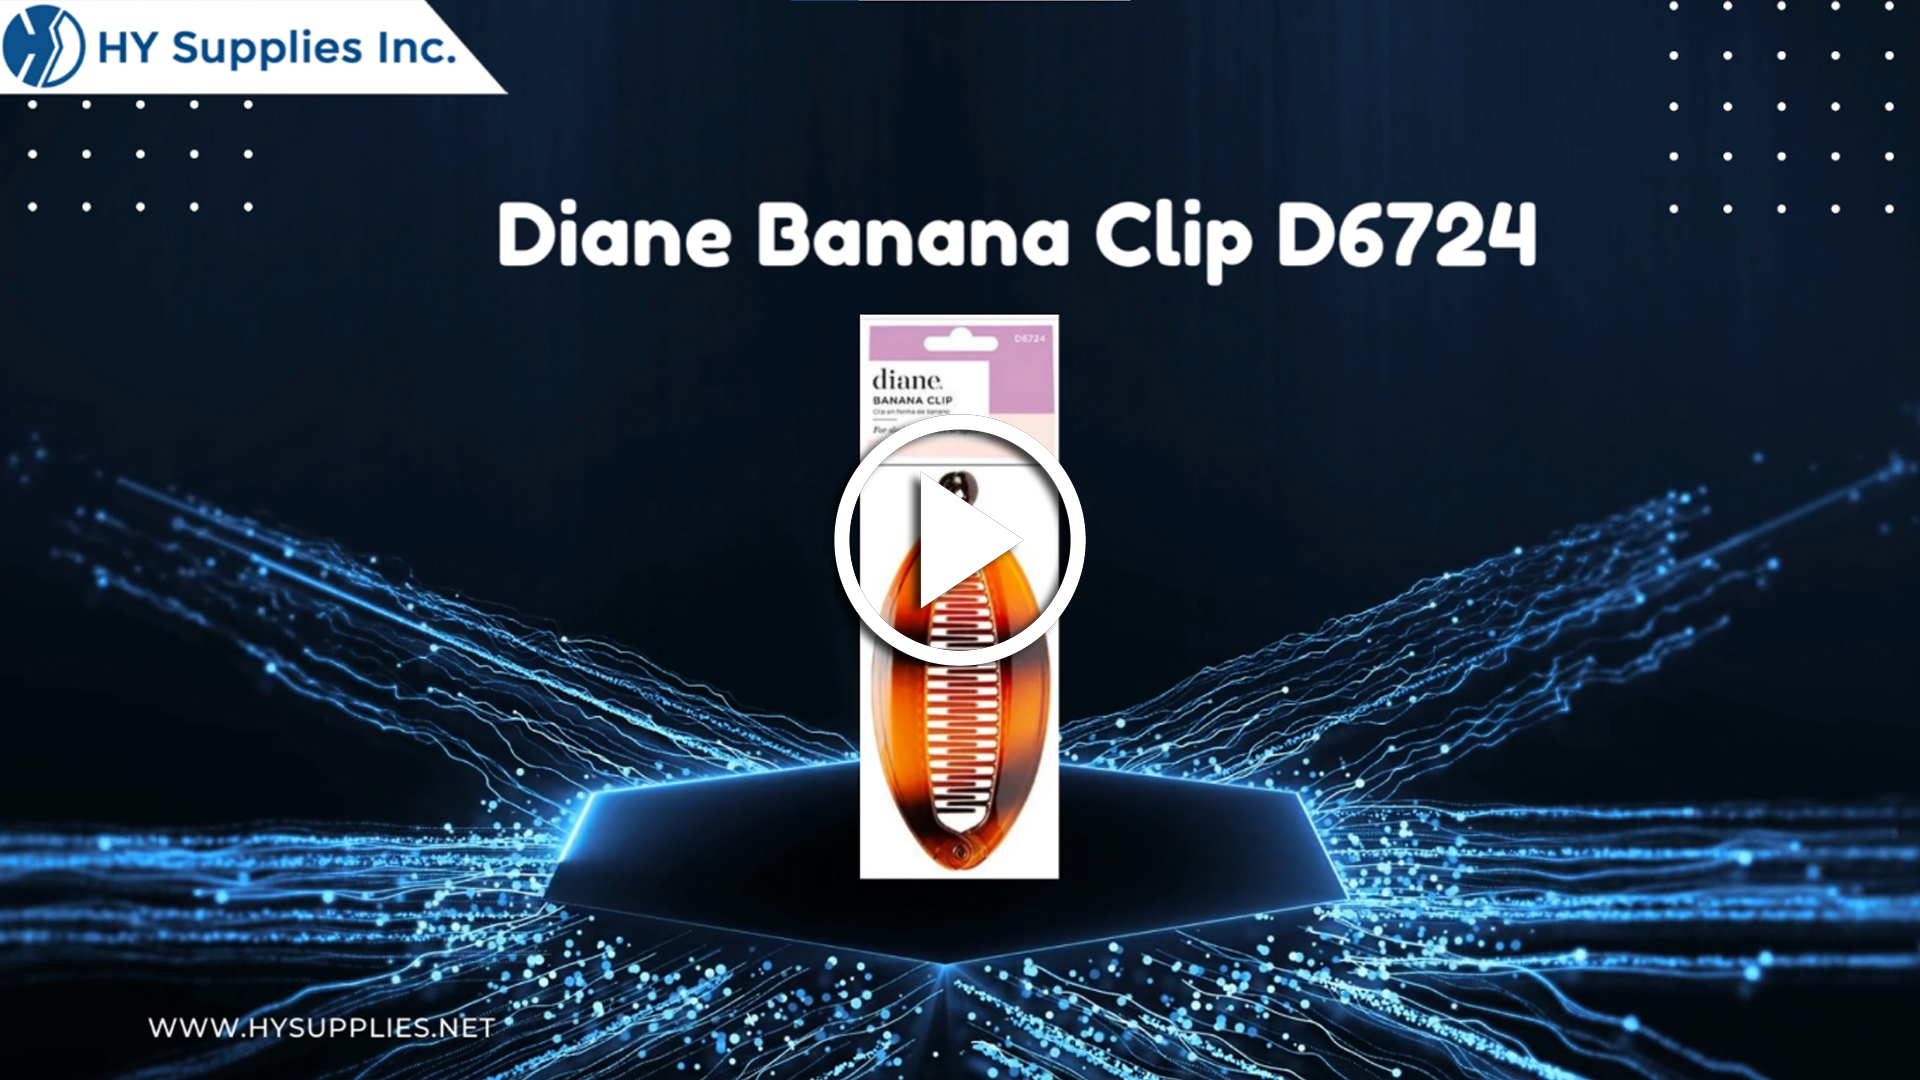 Diane Banana Clip D6724